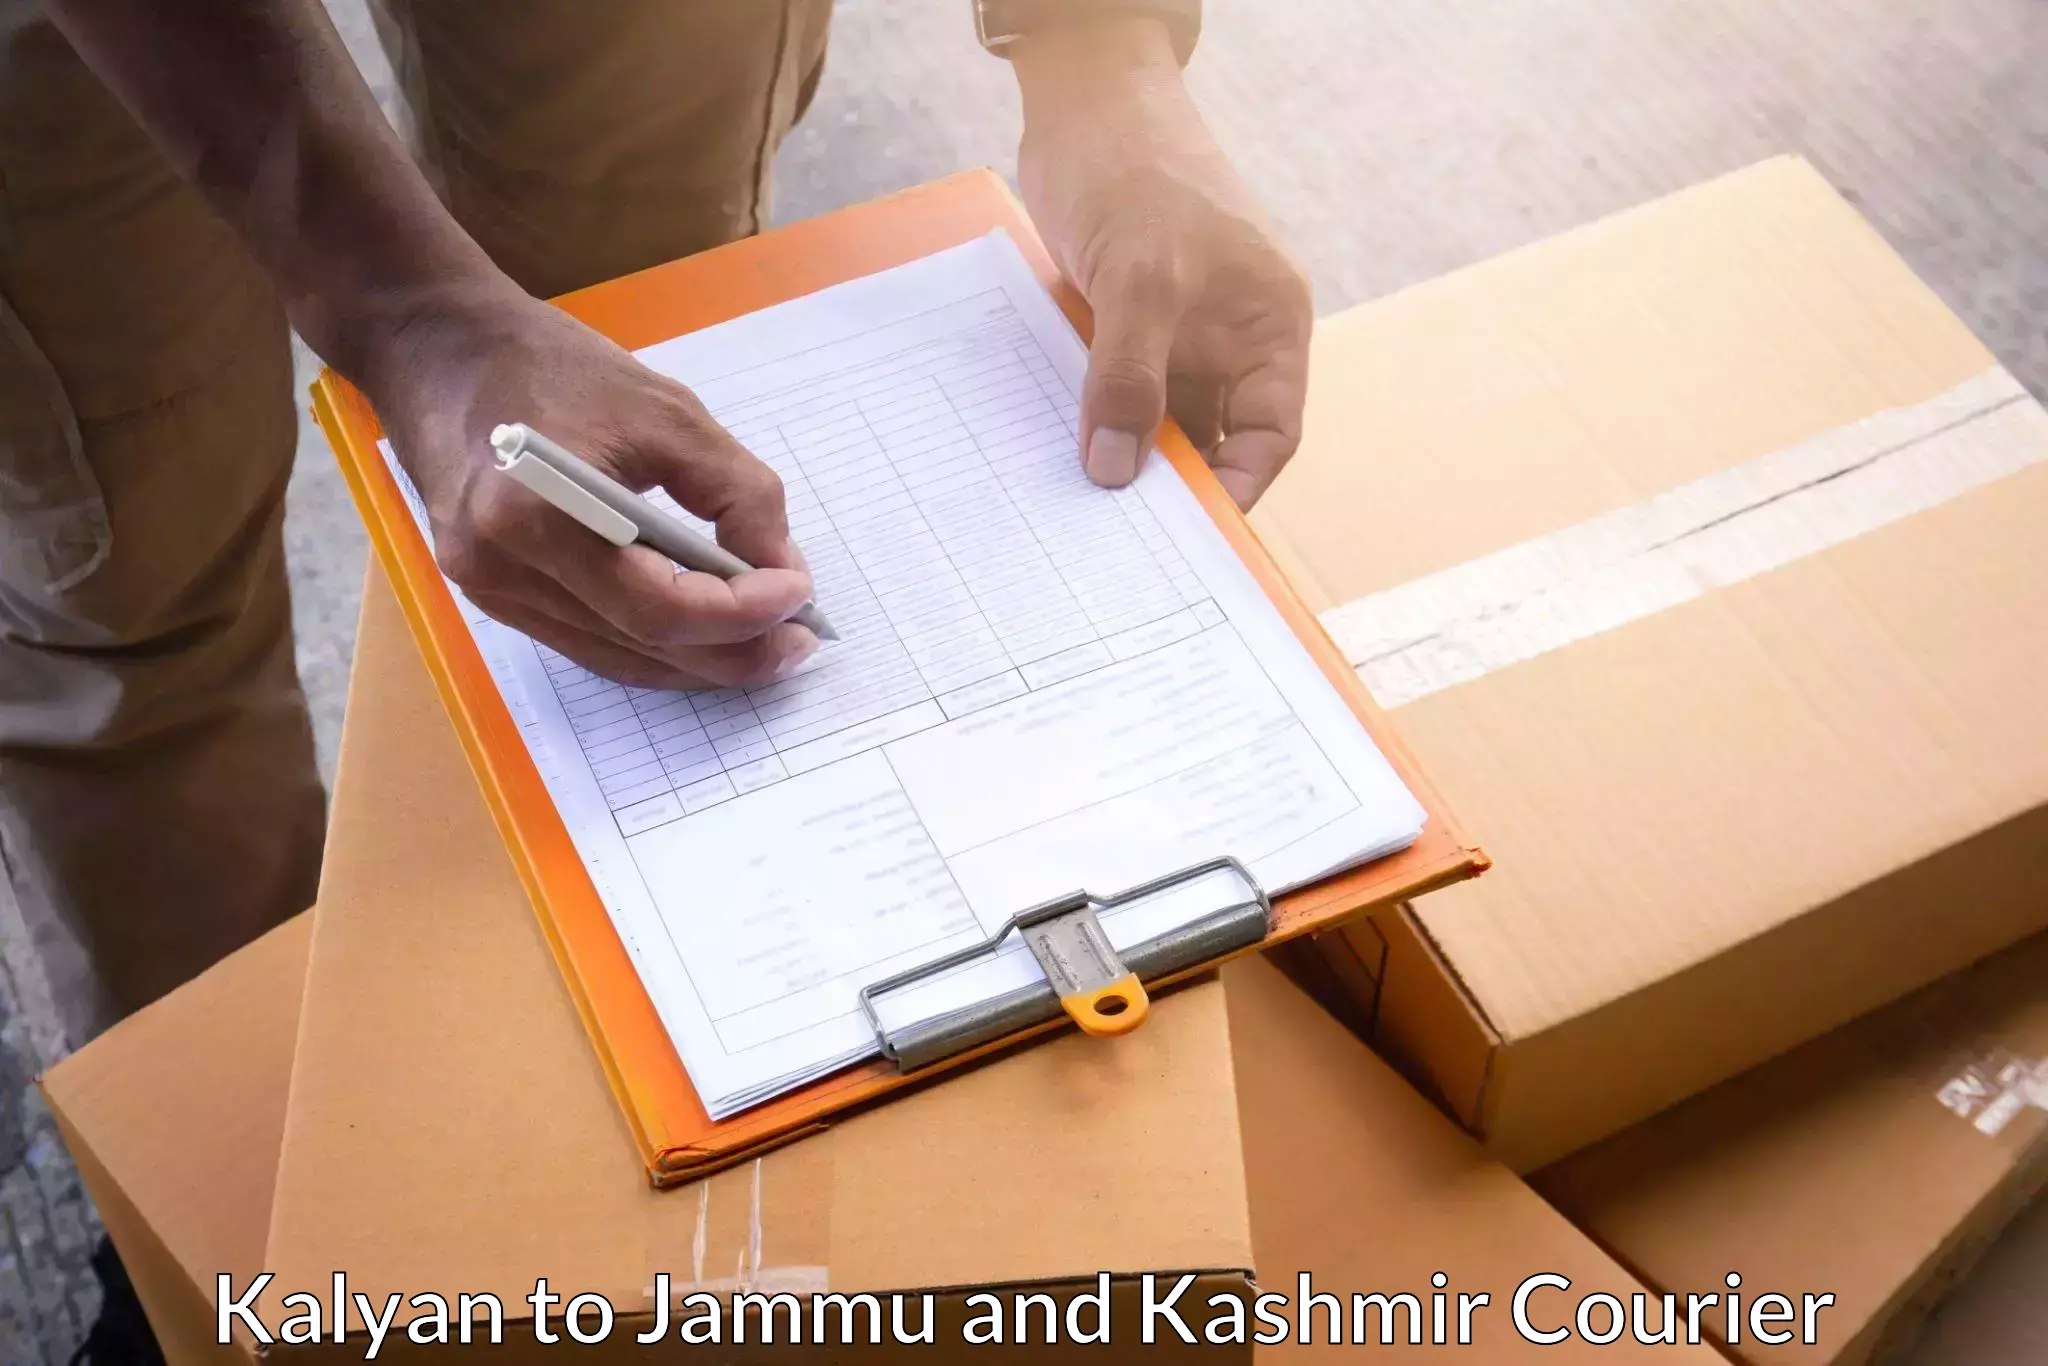 Courier service comparison Kalyan to Kargil